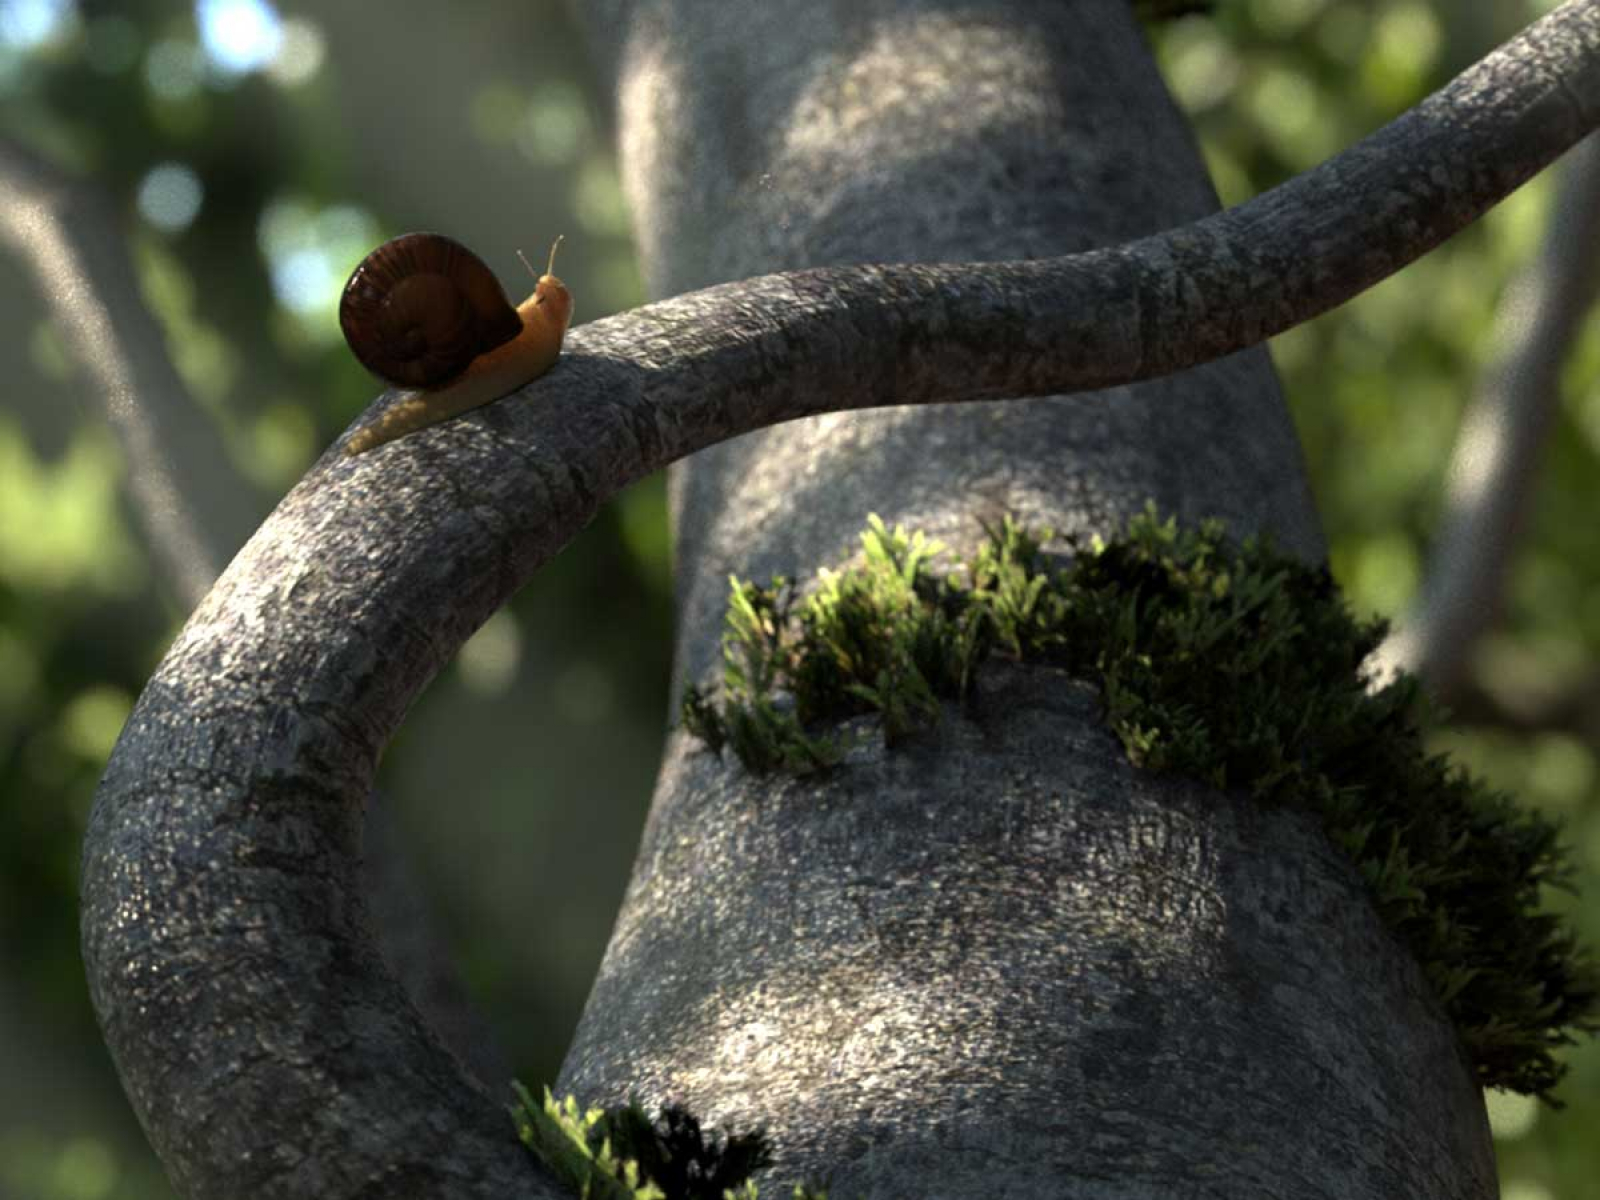 A tiny snail on the branch of a tree.